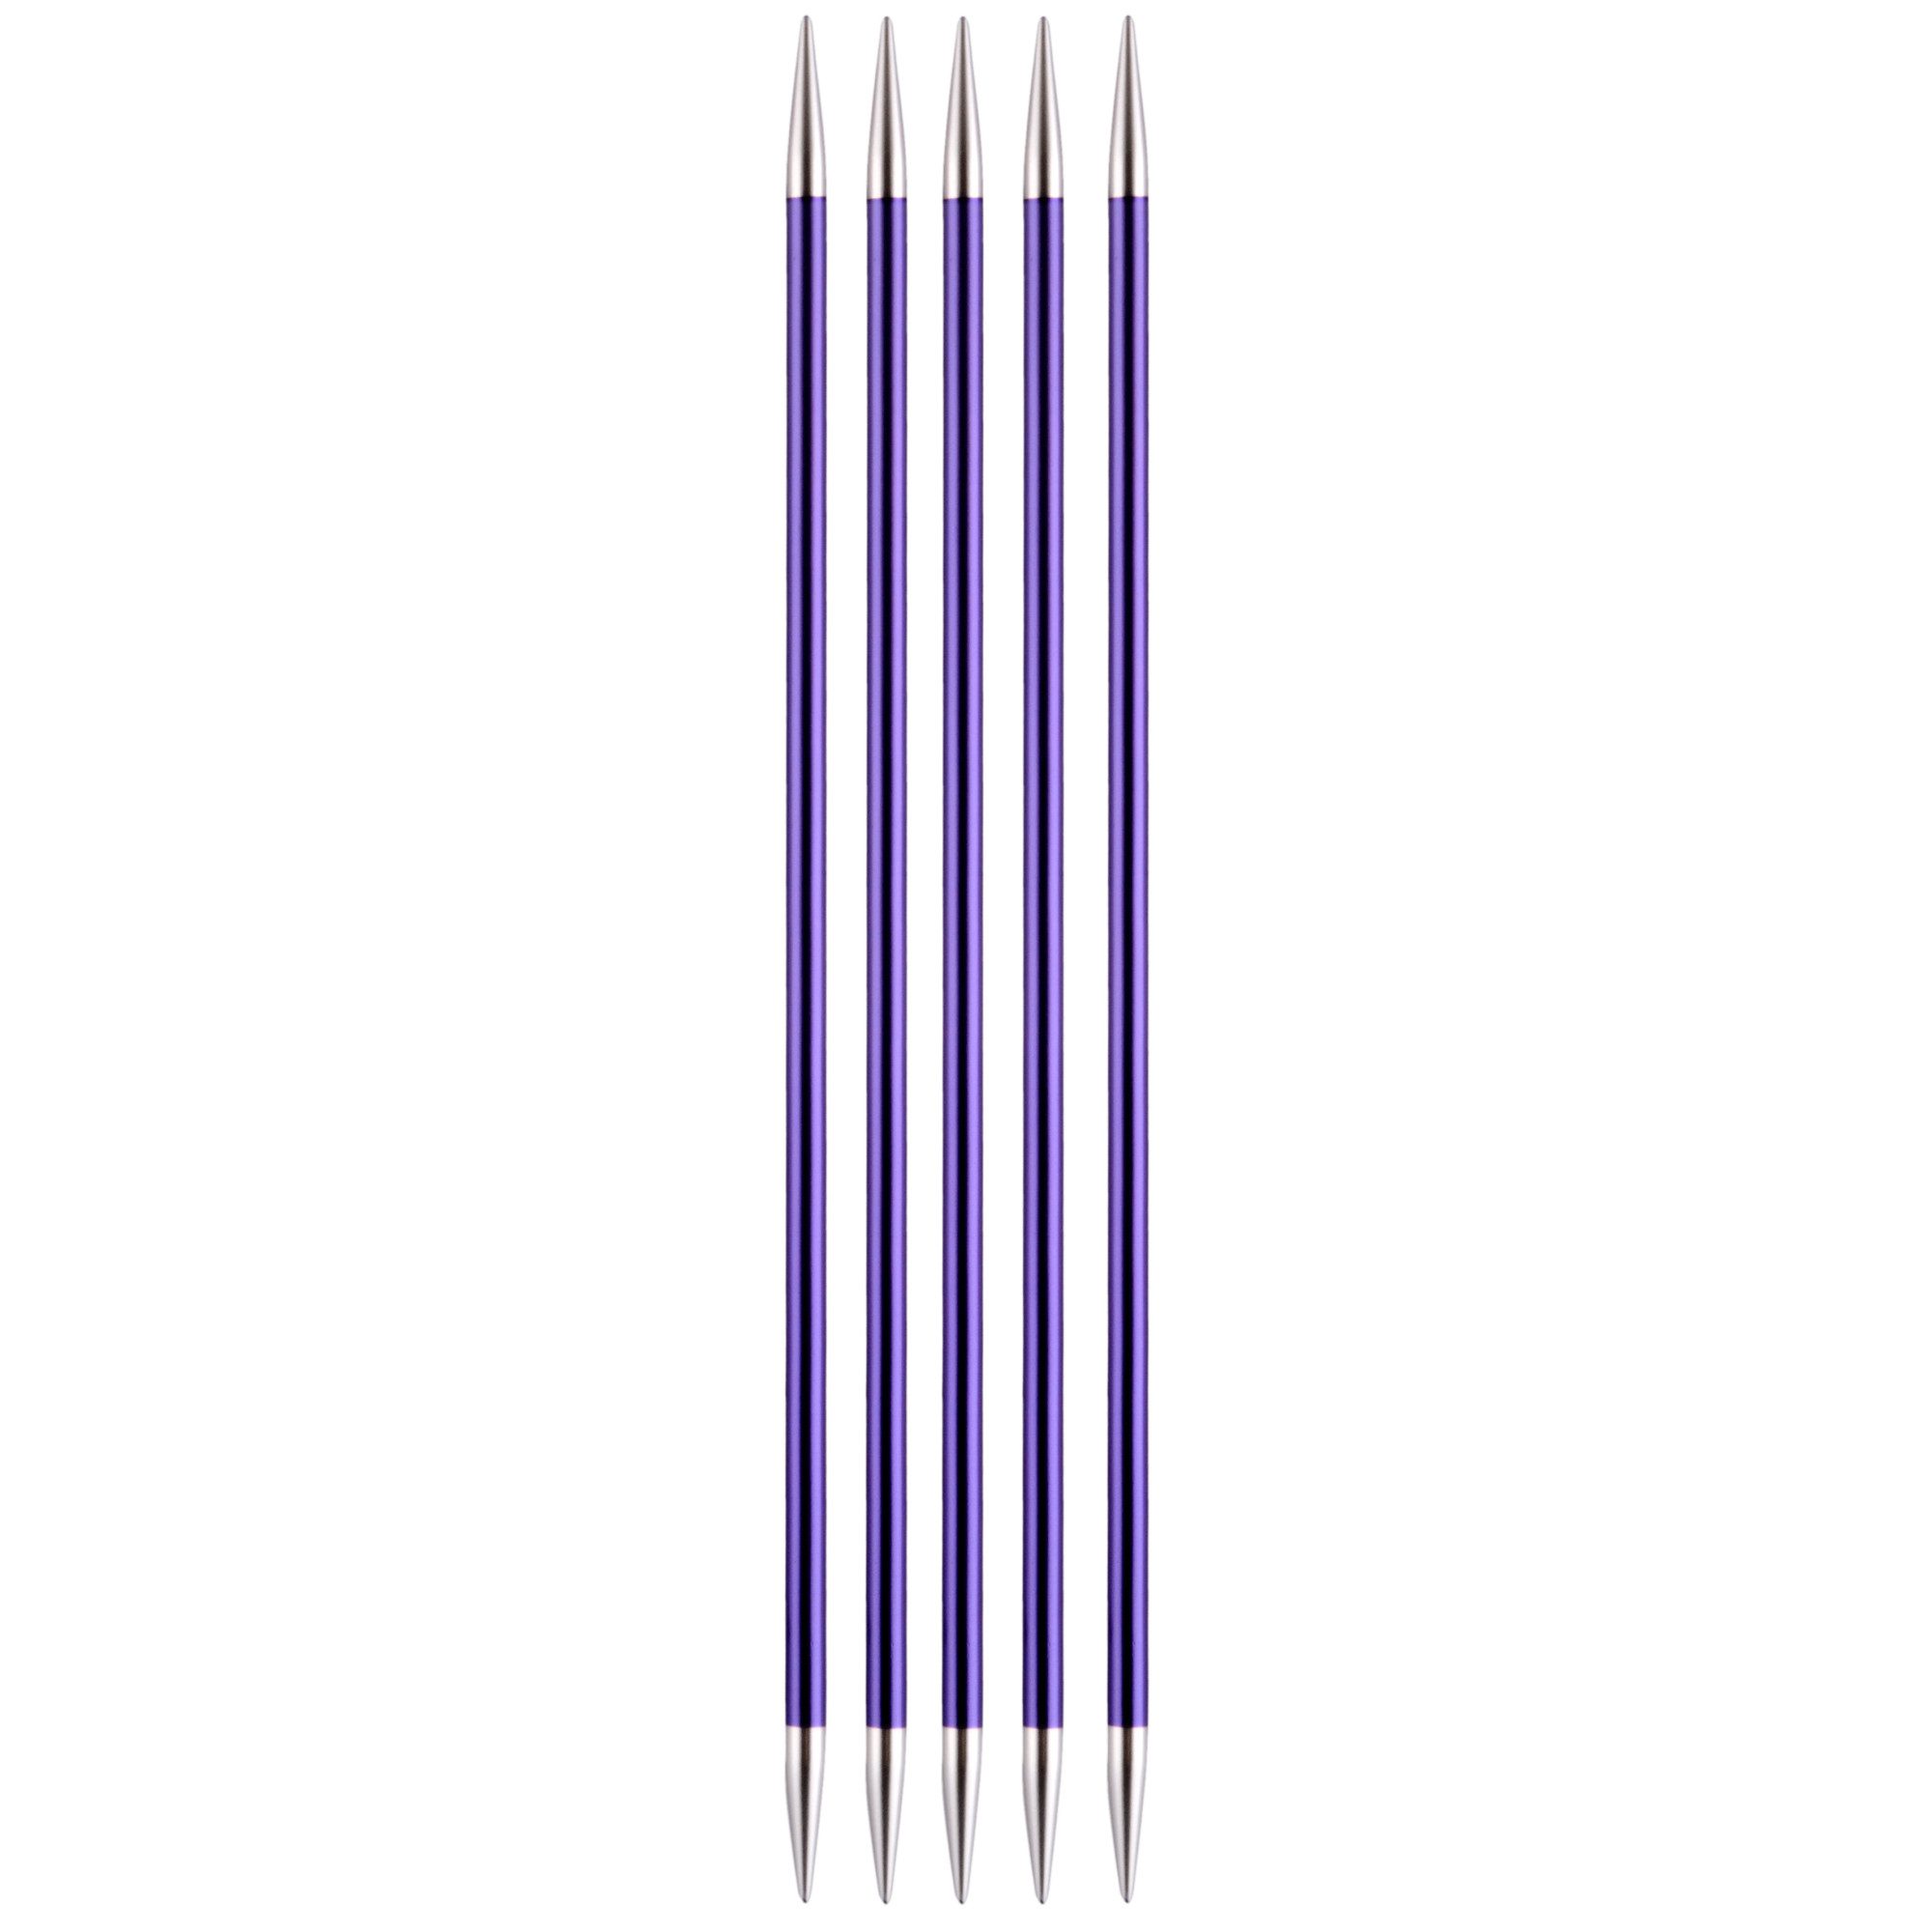 Knitpro Zing Double Pointed Needles – 15cm product image